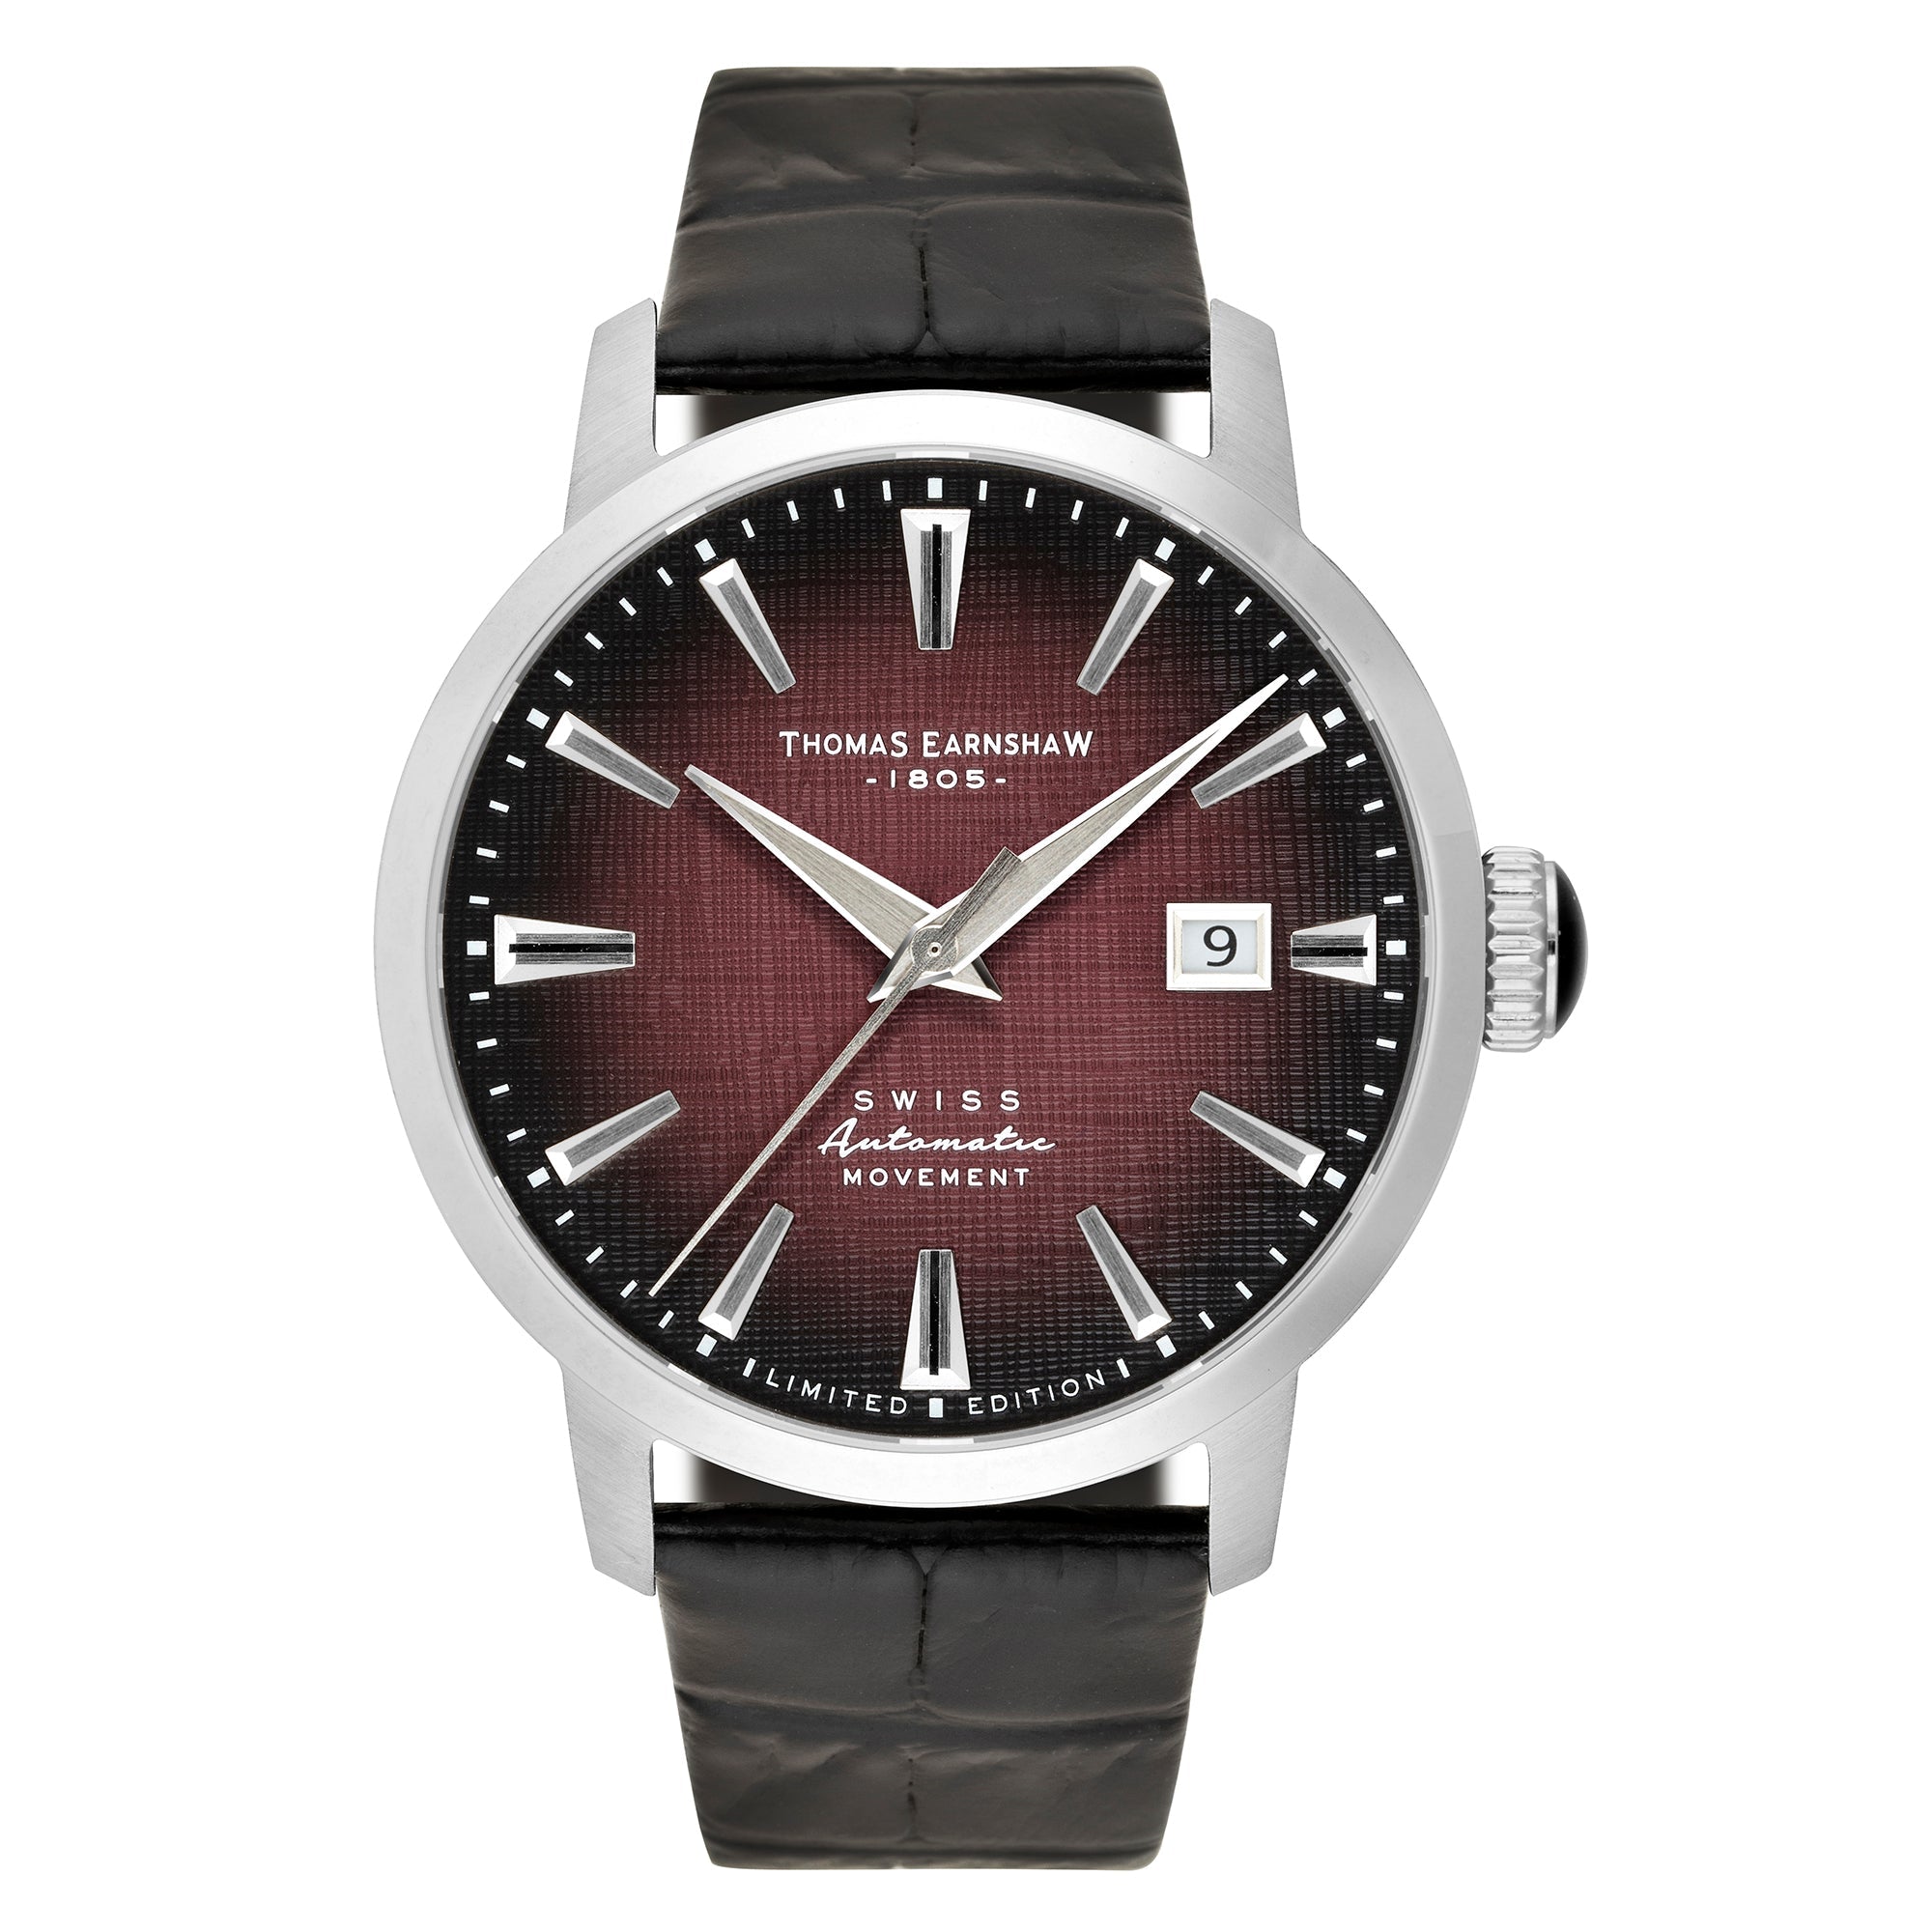 Thomas Earnshaw Thomas Earnshaw Echelon Swiss Made Automatic Chianti Red Men's Limited Edition Watch ES-8812-03